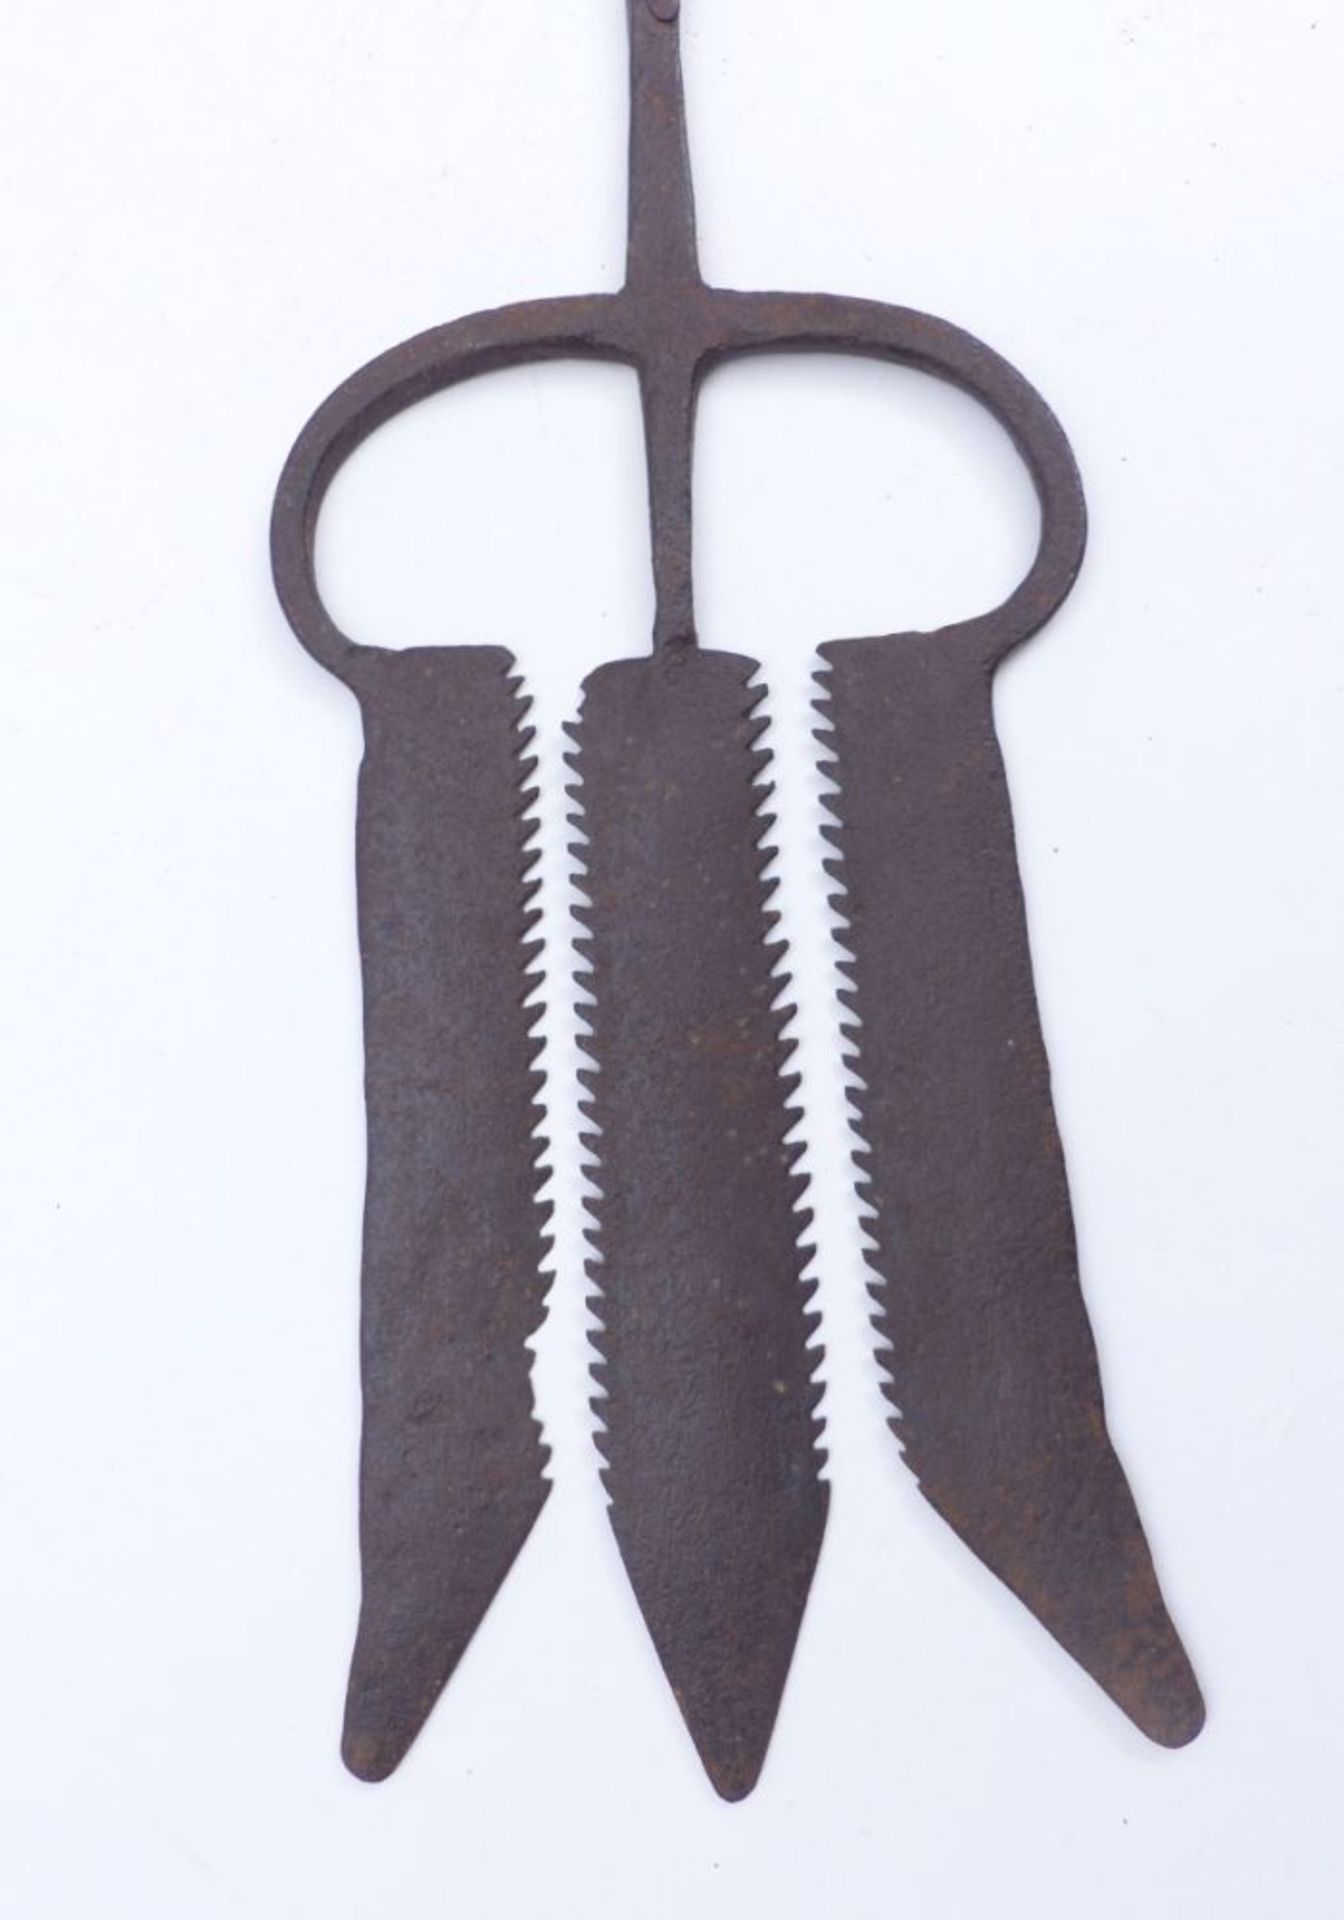 Eel catching tool19th centuryWrought iron. L. 52 cm. - Corroded.Aalstecher19. Jh.Schmiedeeisen. L. - Bild 2 aus 2